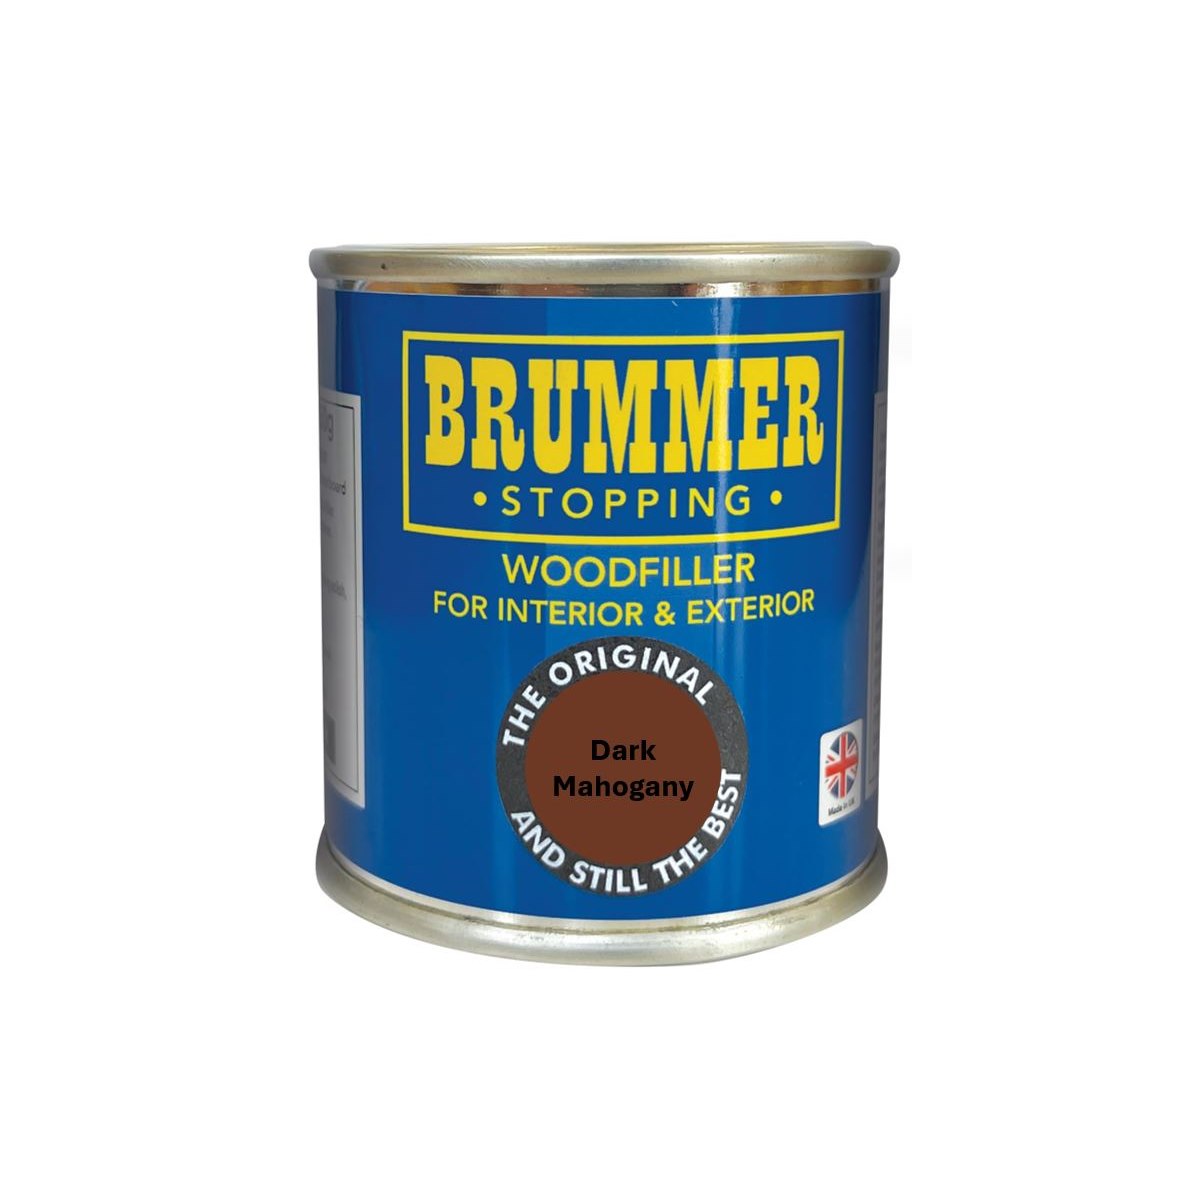 Brummer Woodfiller for Interior and Exteior Use Dark Mahogany 700g